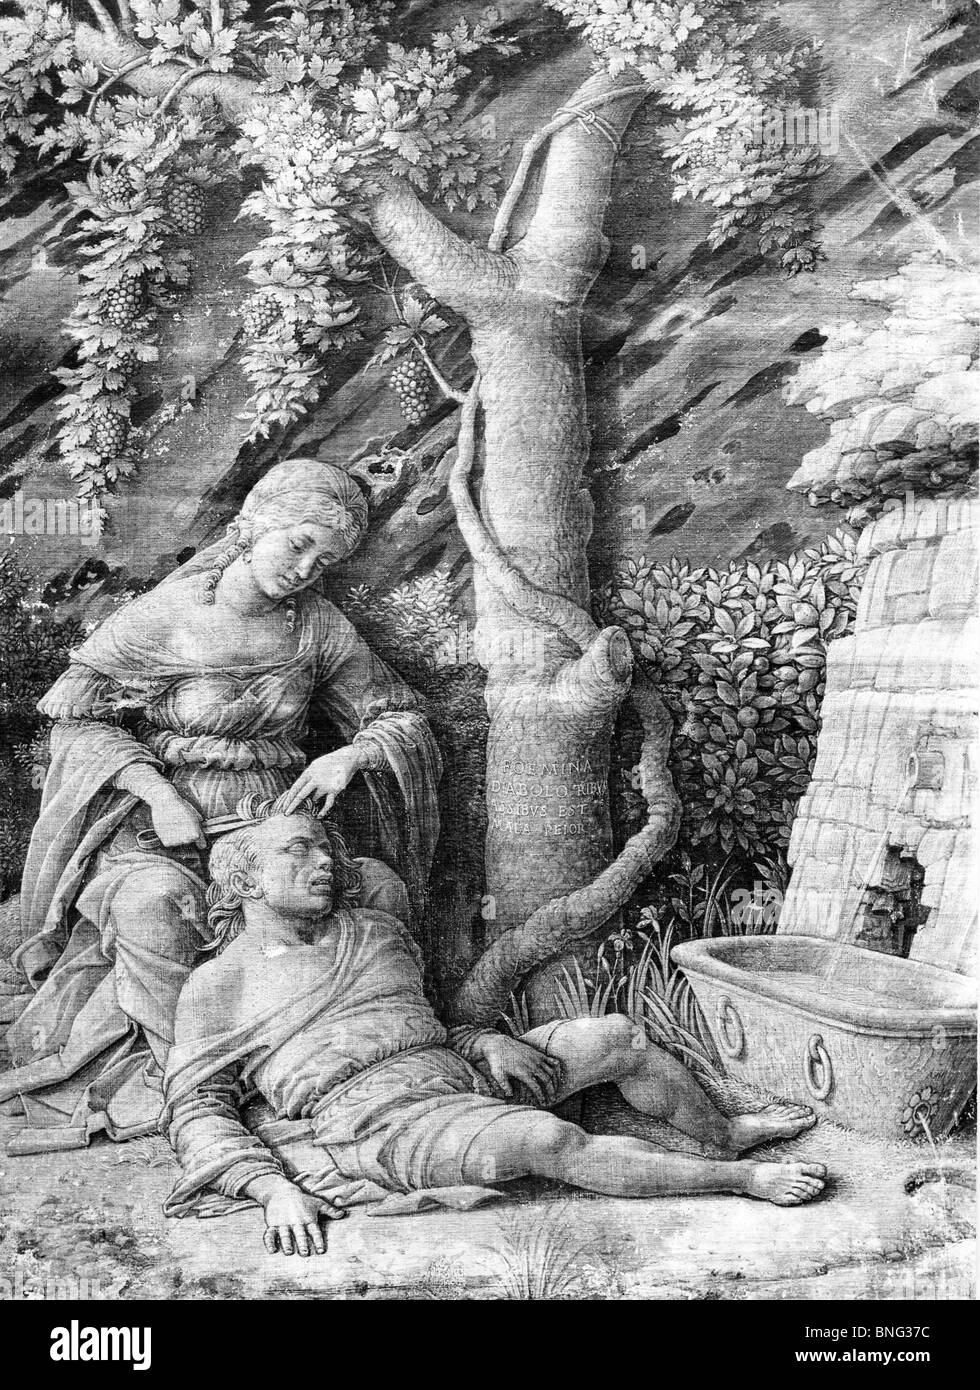 Samson and Delilah by Andrea Mantegna, 1431-1506 Stock Photo